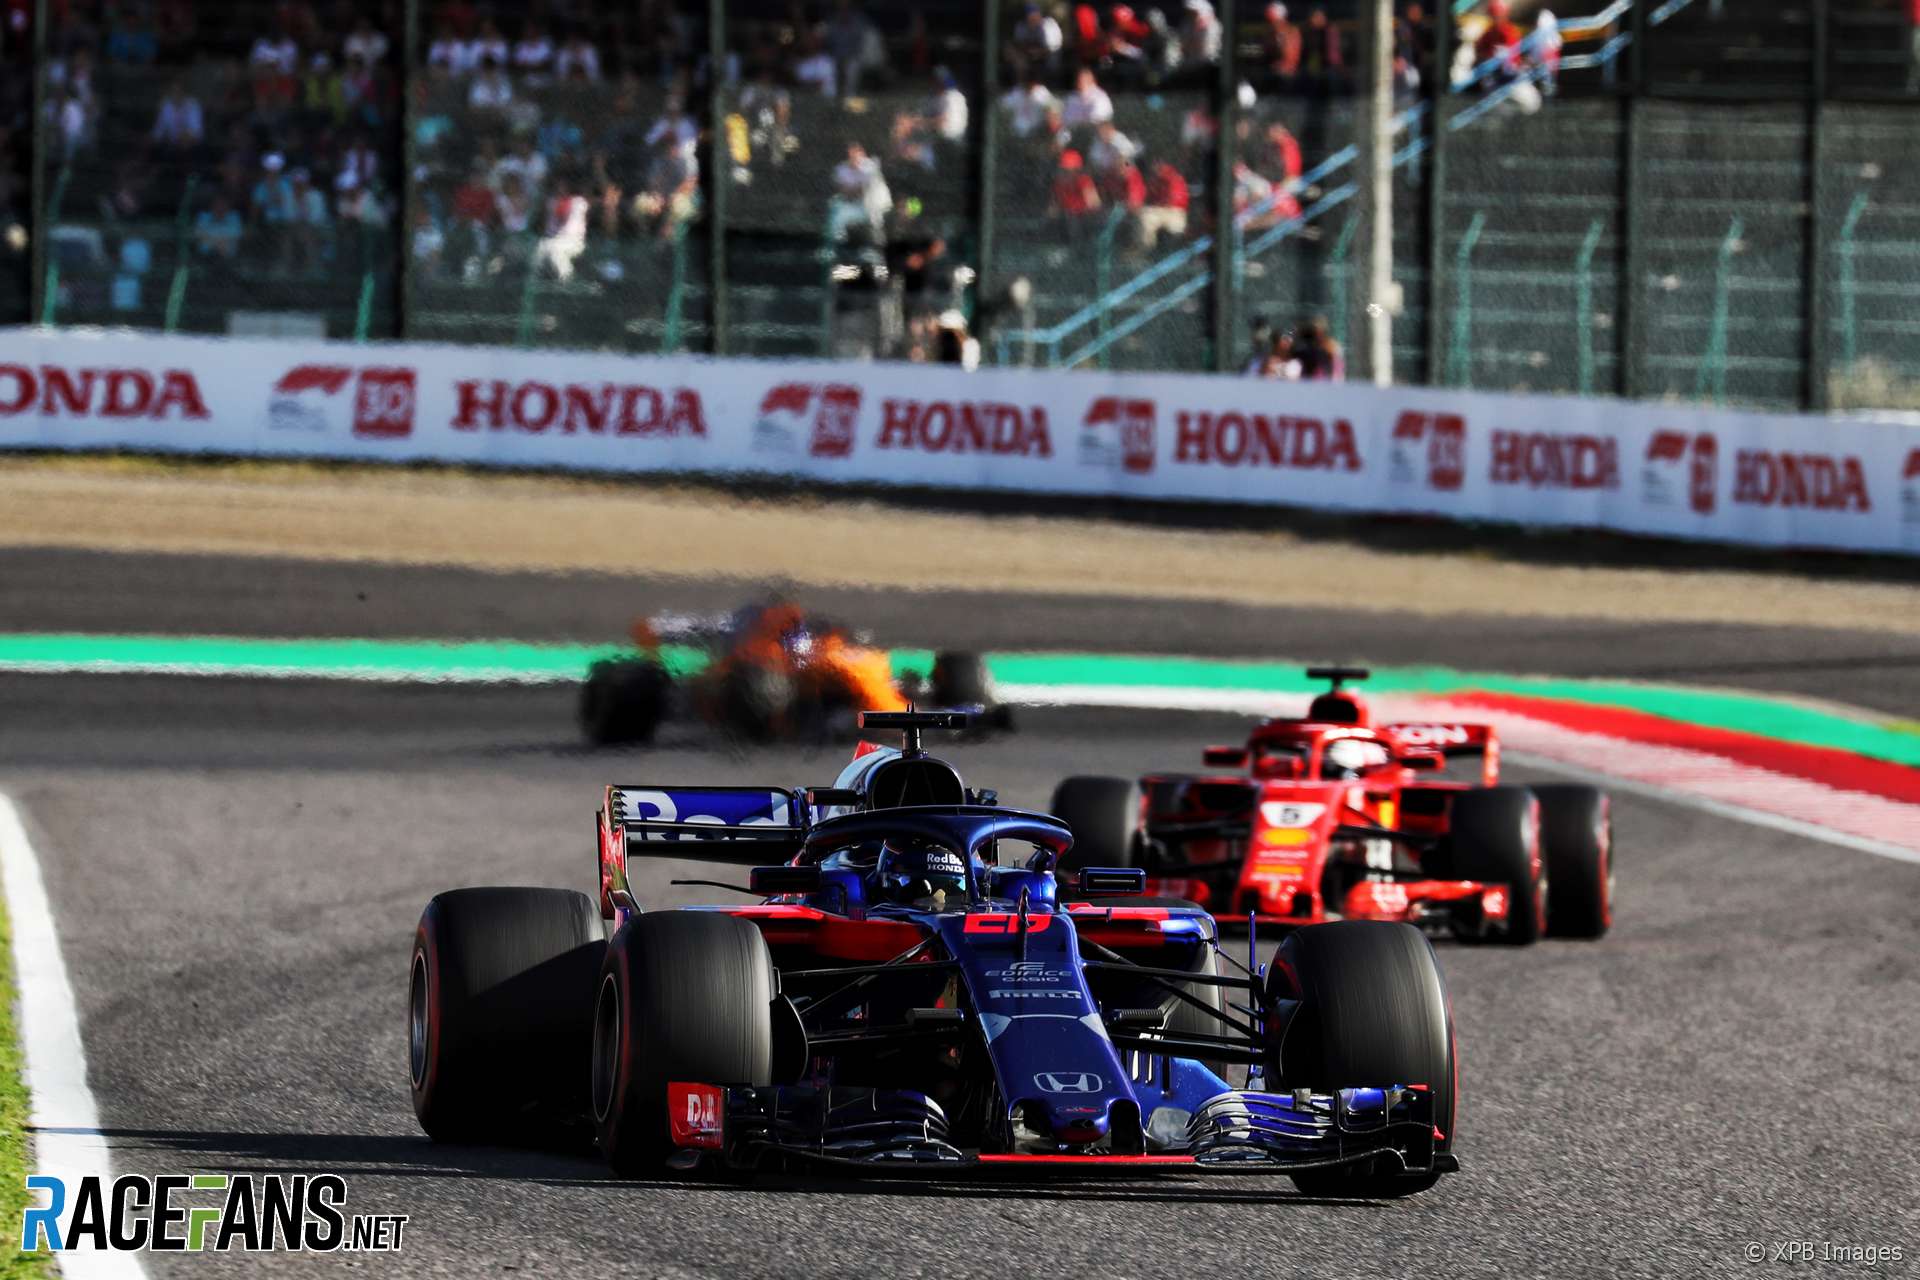 Brendon Hartley, Toro Rosso, Suzuka, 2018